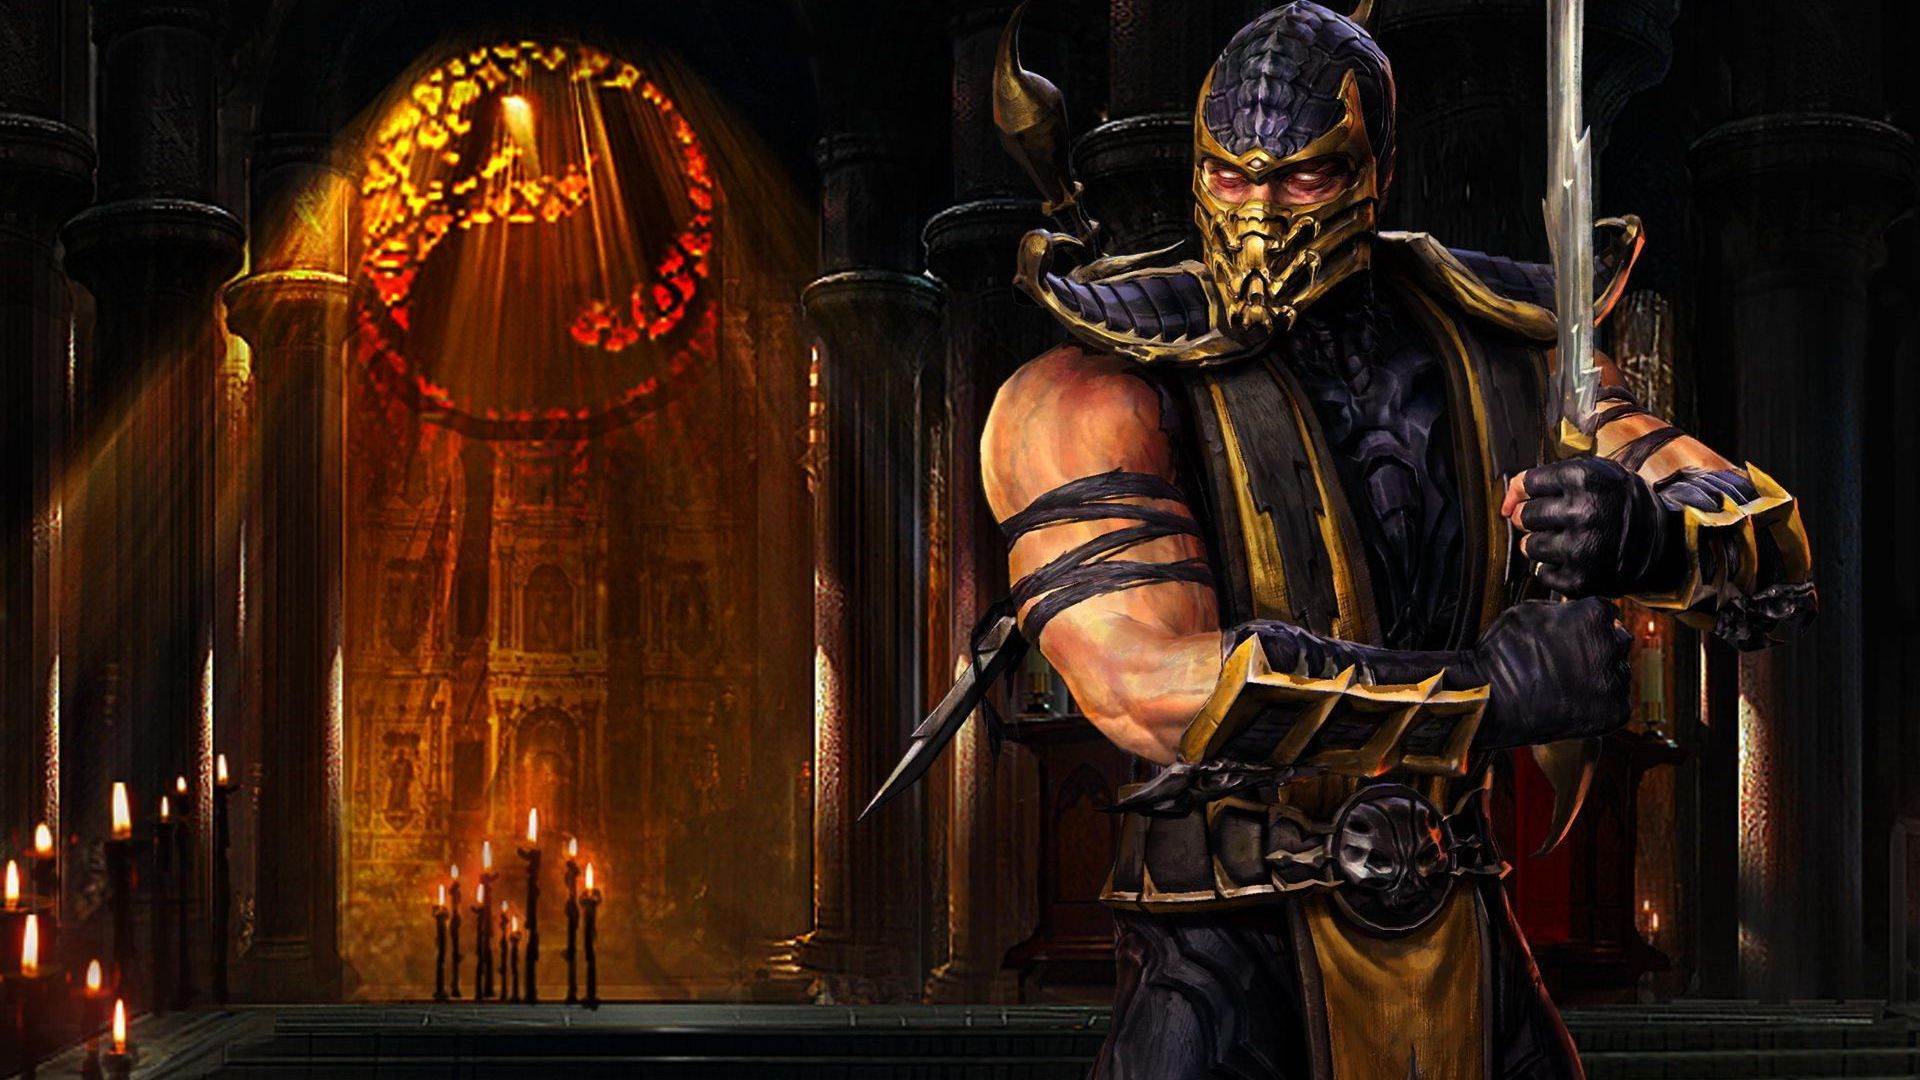 Mortal Kombat Widescreen Wallpaper